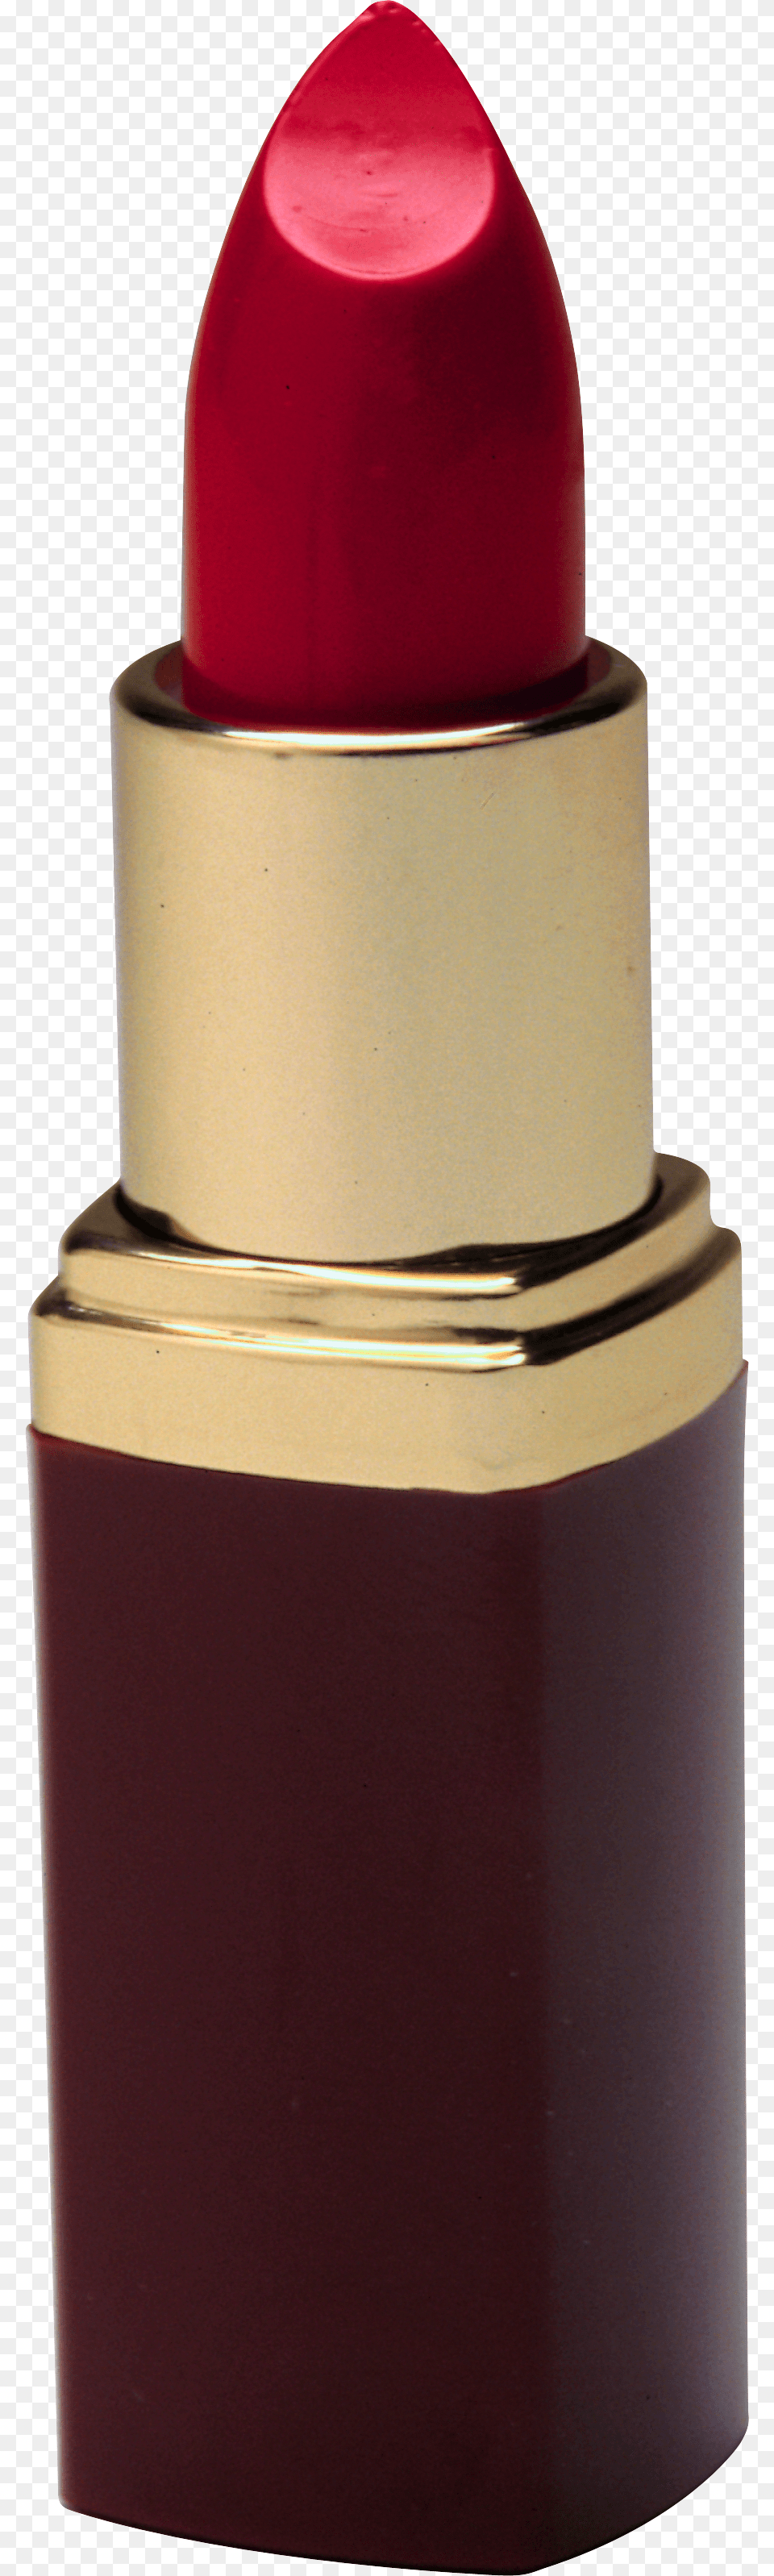 Lipstick, Cosmetics, Bottle, Perfume Png Image